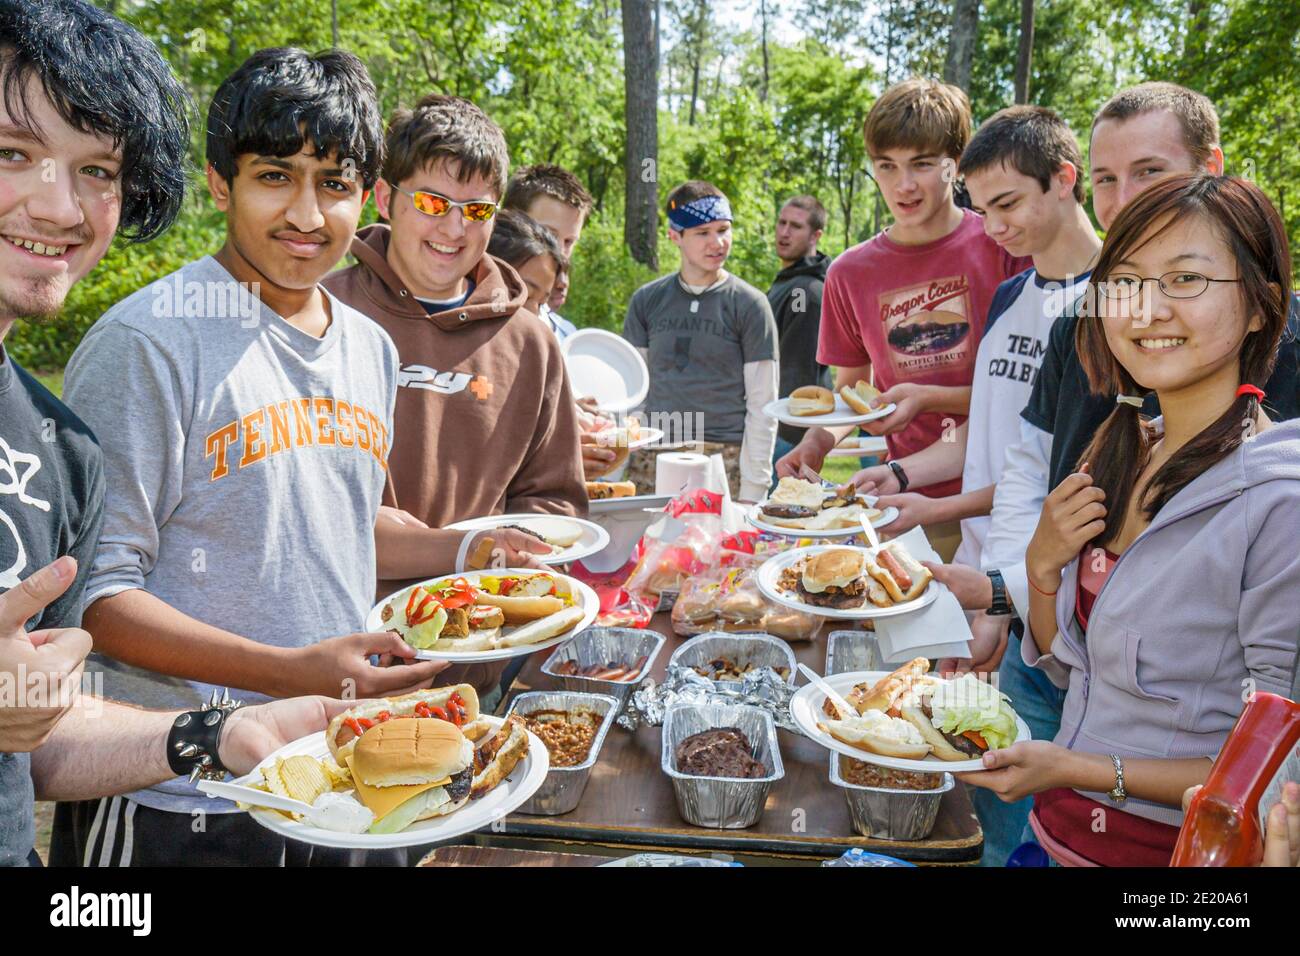 Alabama Historic Blakeley State Park Studenten Klasse Ausflug Picknick, asiatisch orientalisch Teenager Teenager Jungen Mädchen Buffet Self-Service, Stockfoto